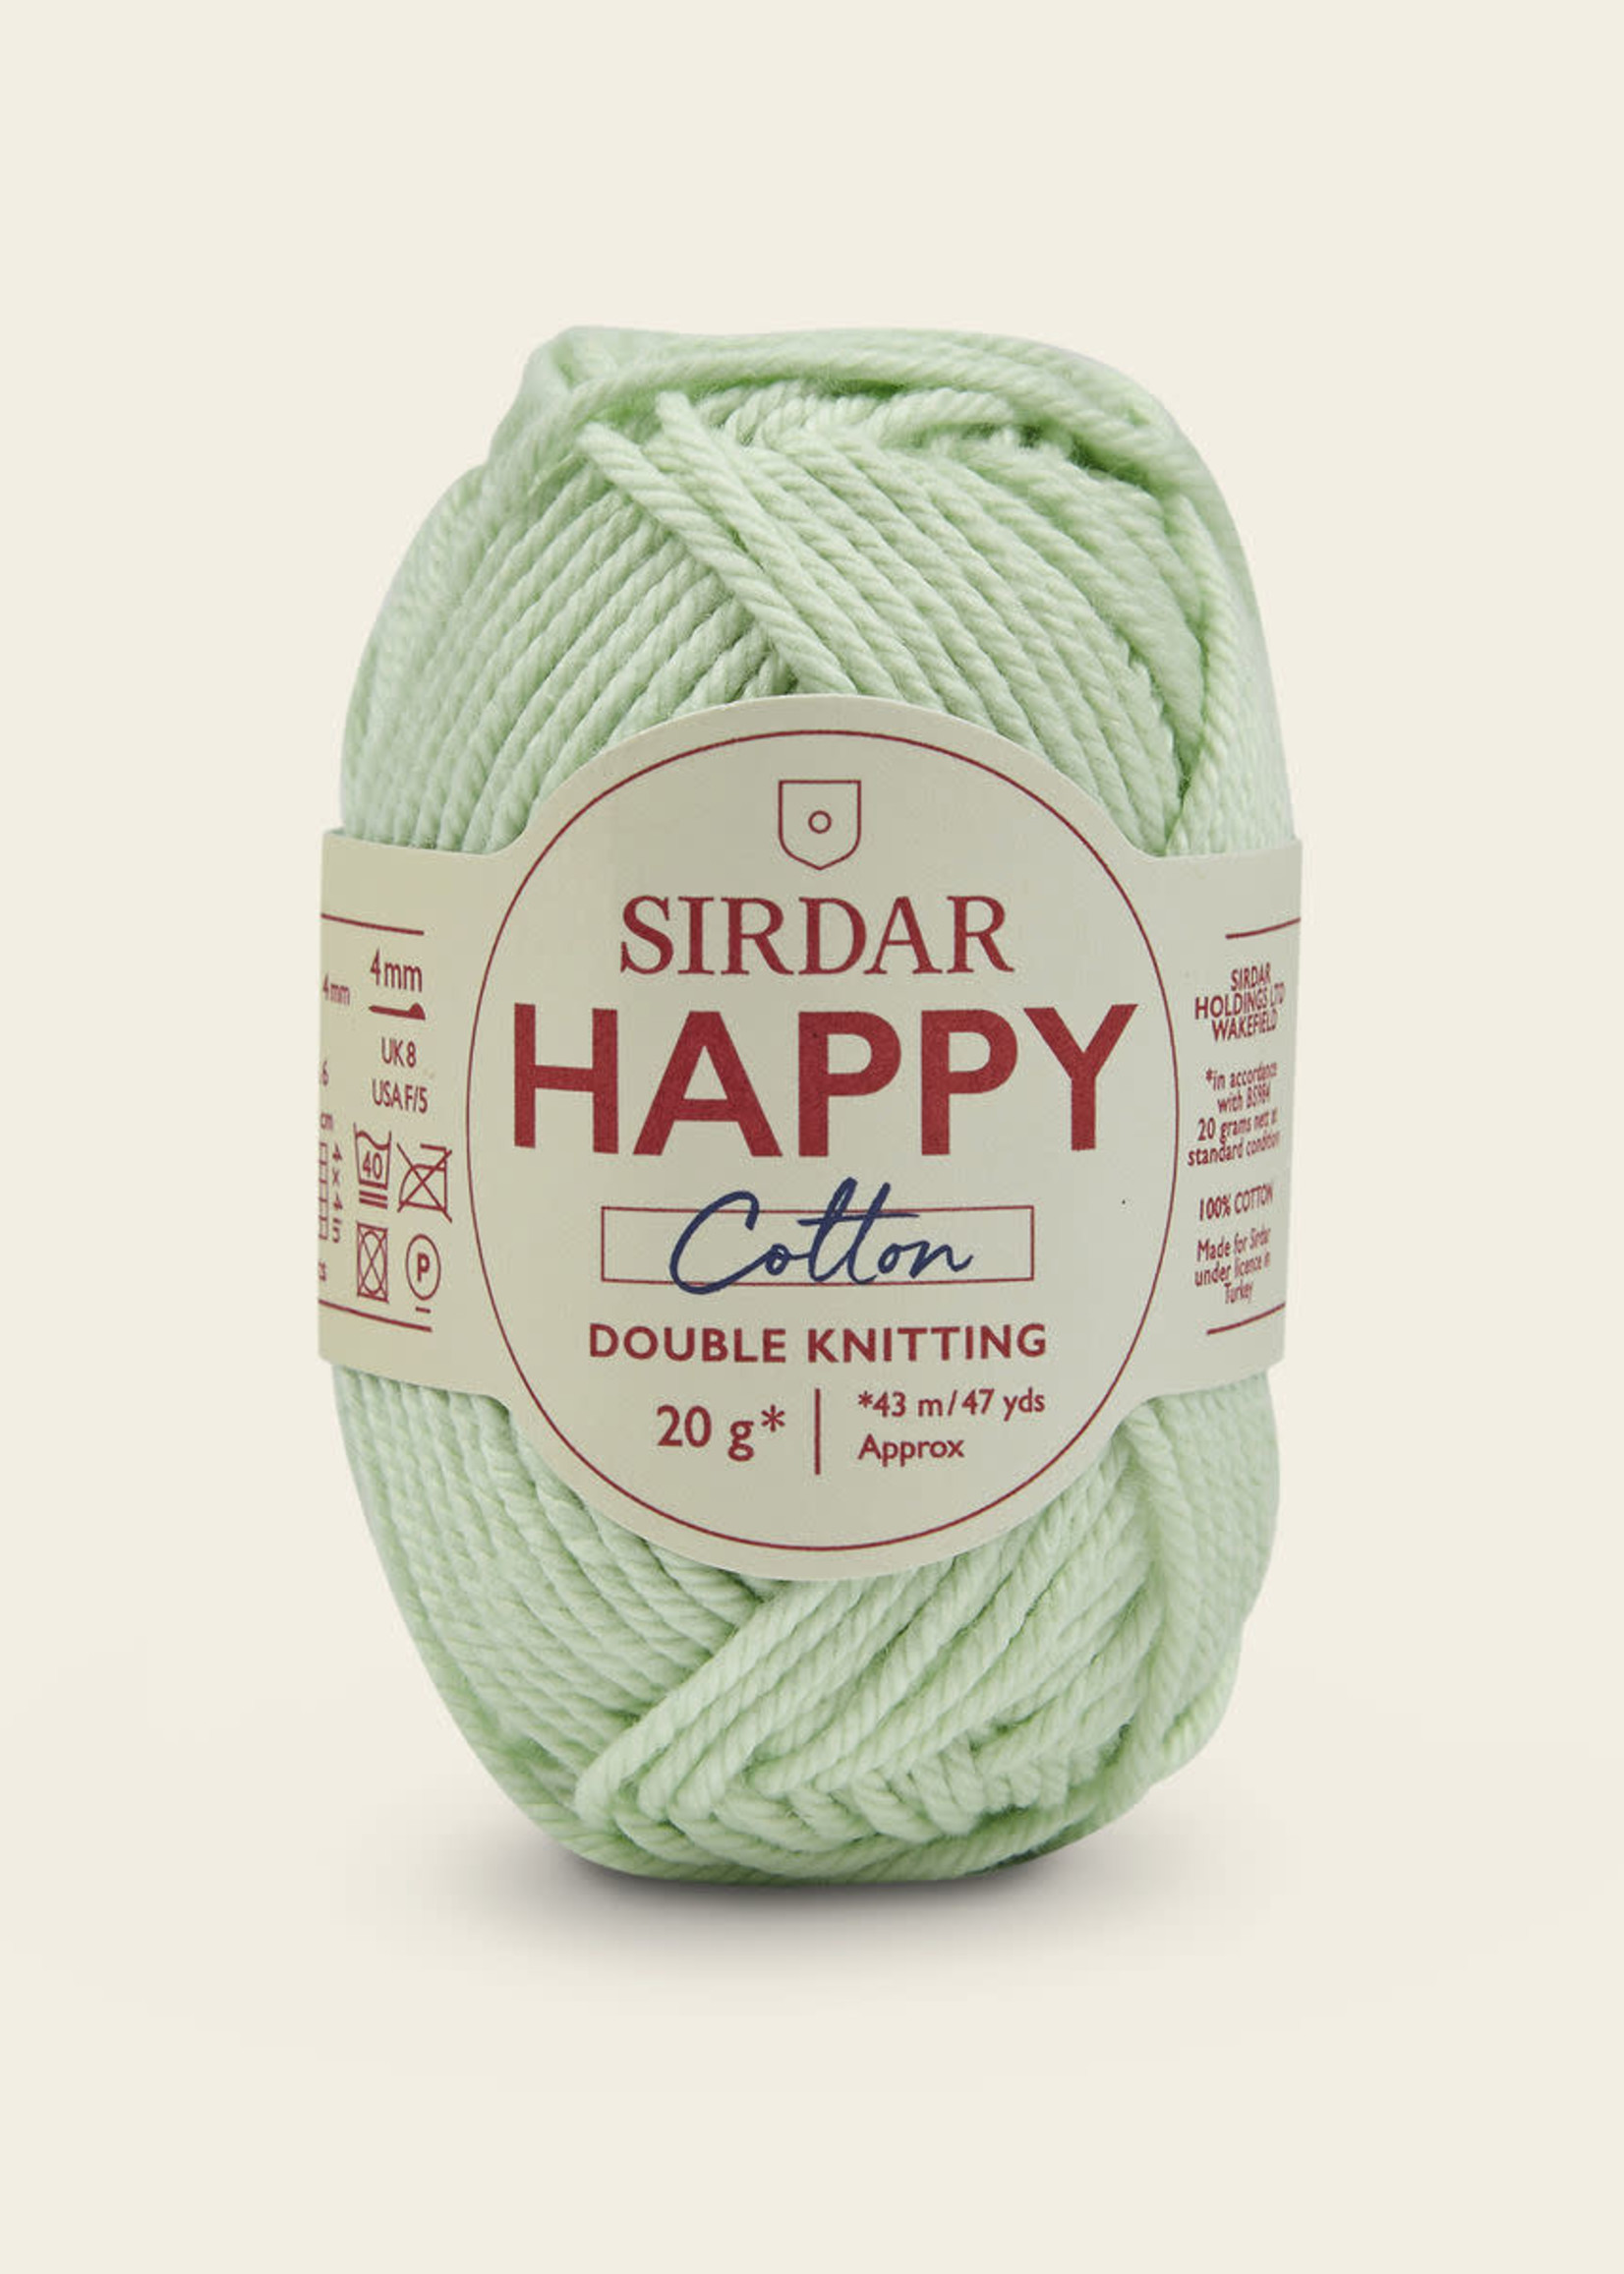 Sirdar Sirdar Happy Cotton #783 Squeaky